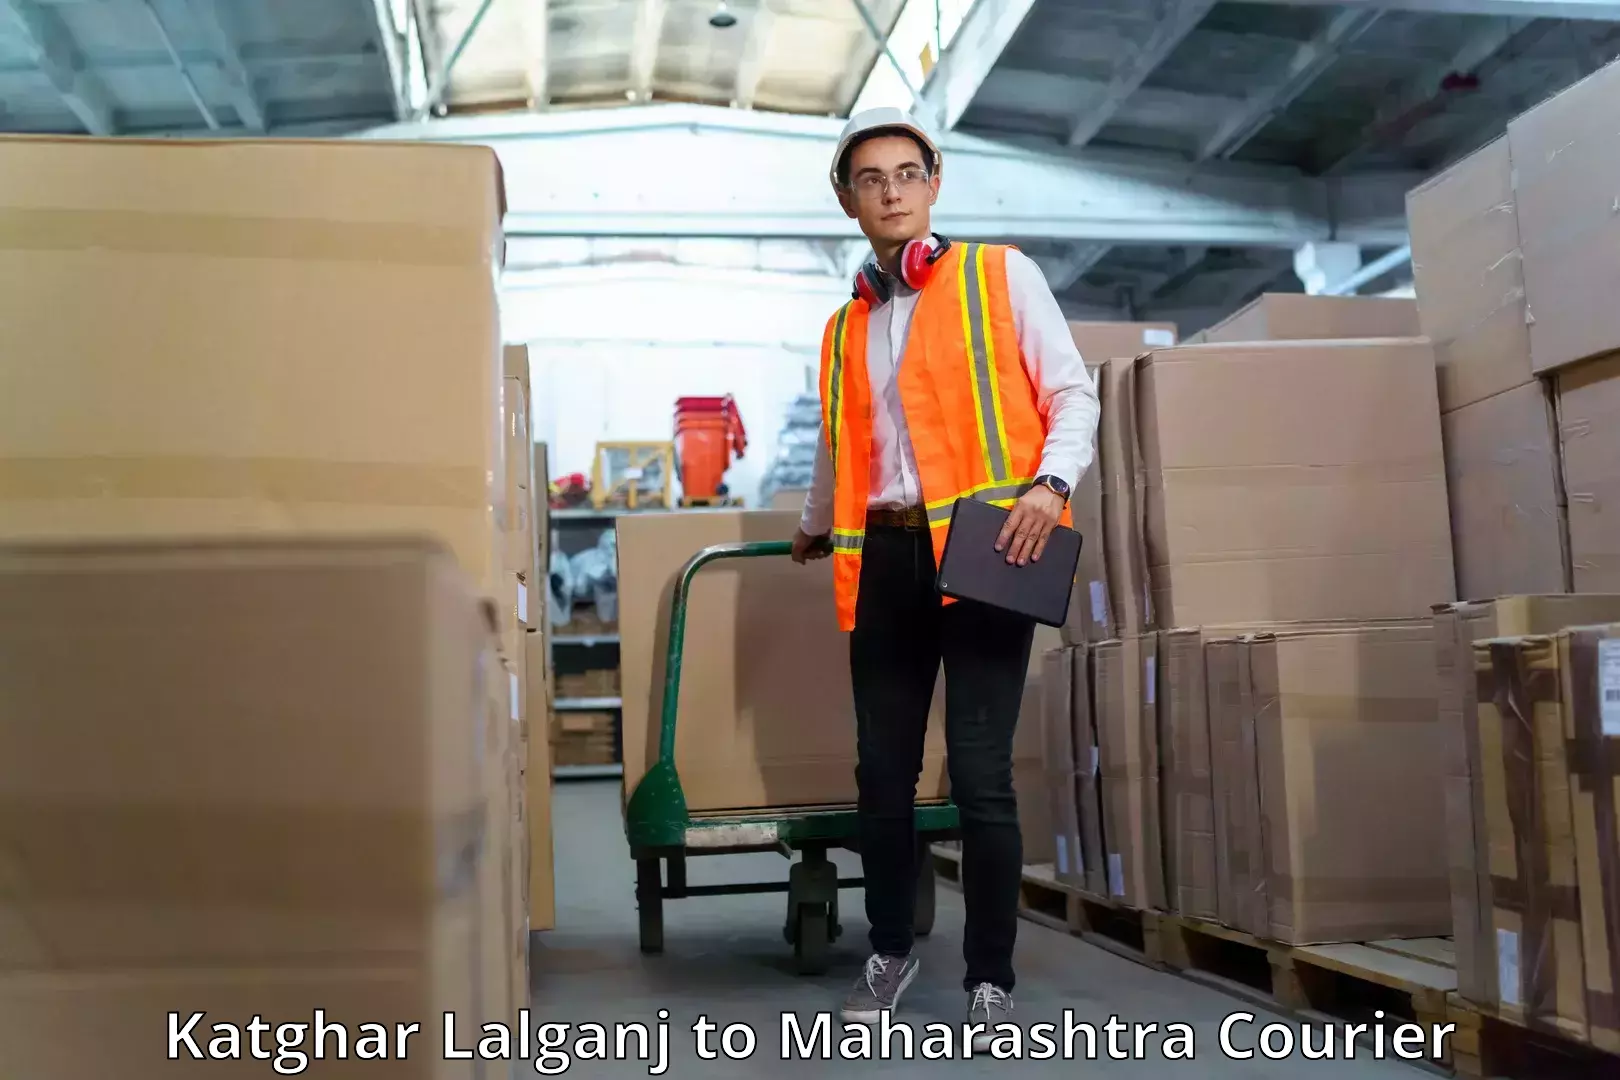 Customizable delivery plans Katghar Lalganj to Kalyan Dombivli